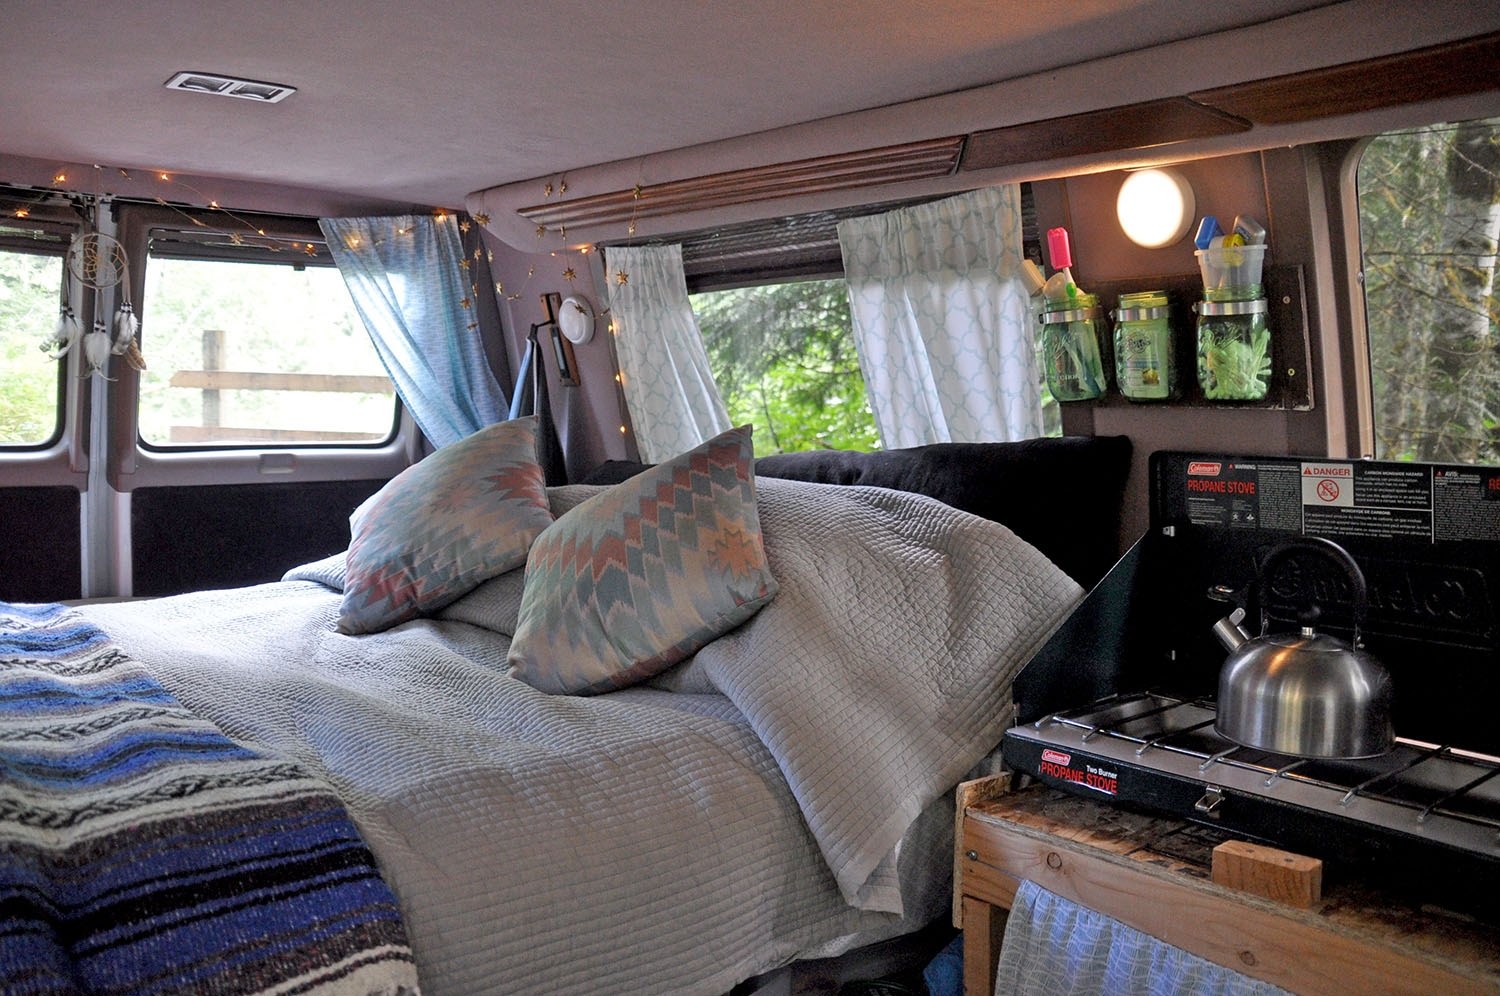 DIY Campervan Guide to Planning a Campervan Trip